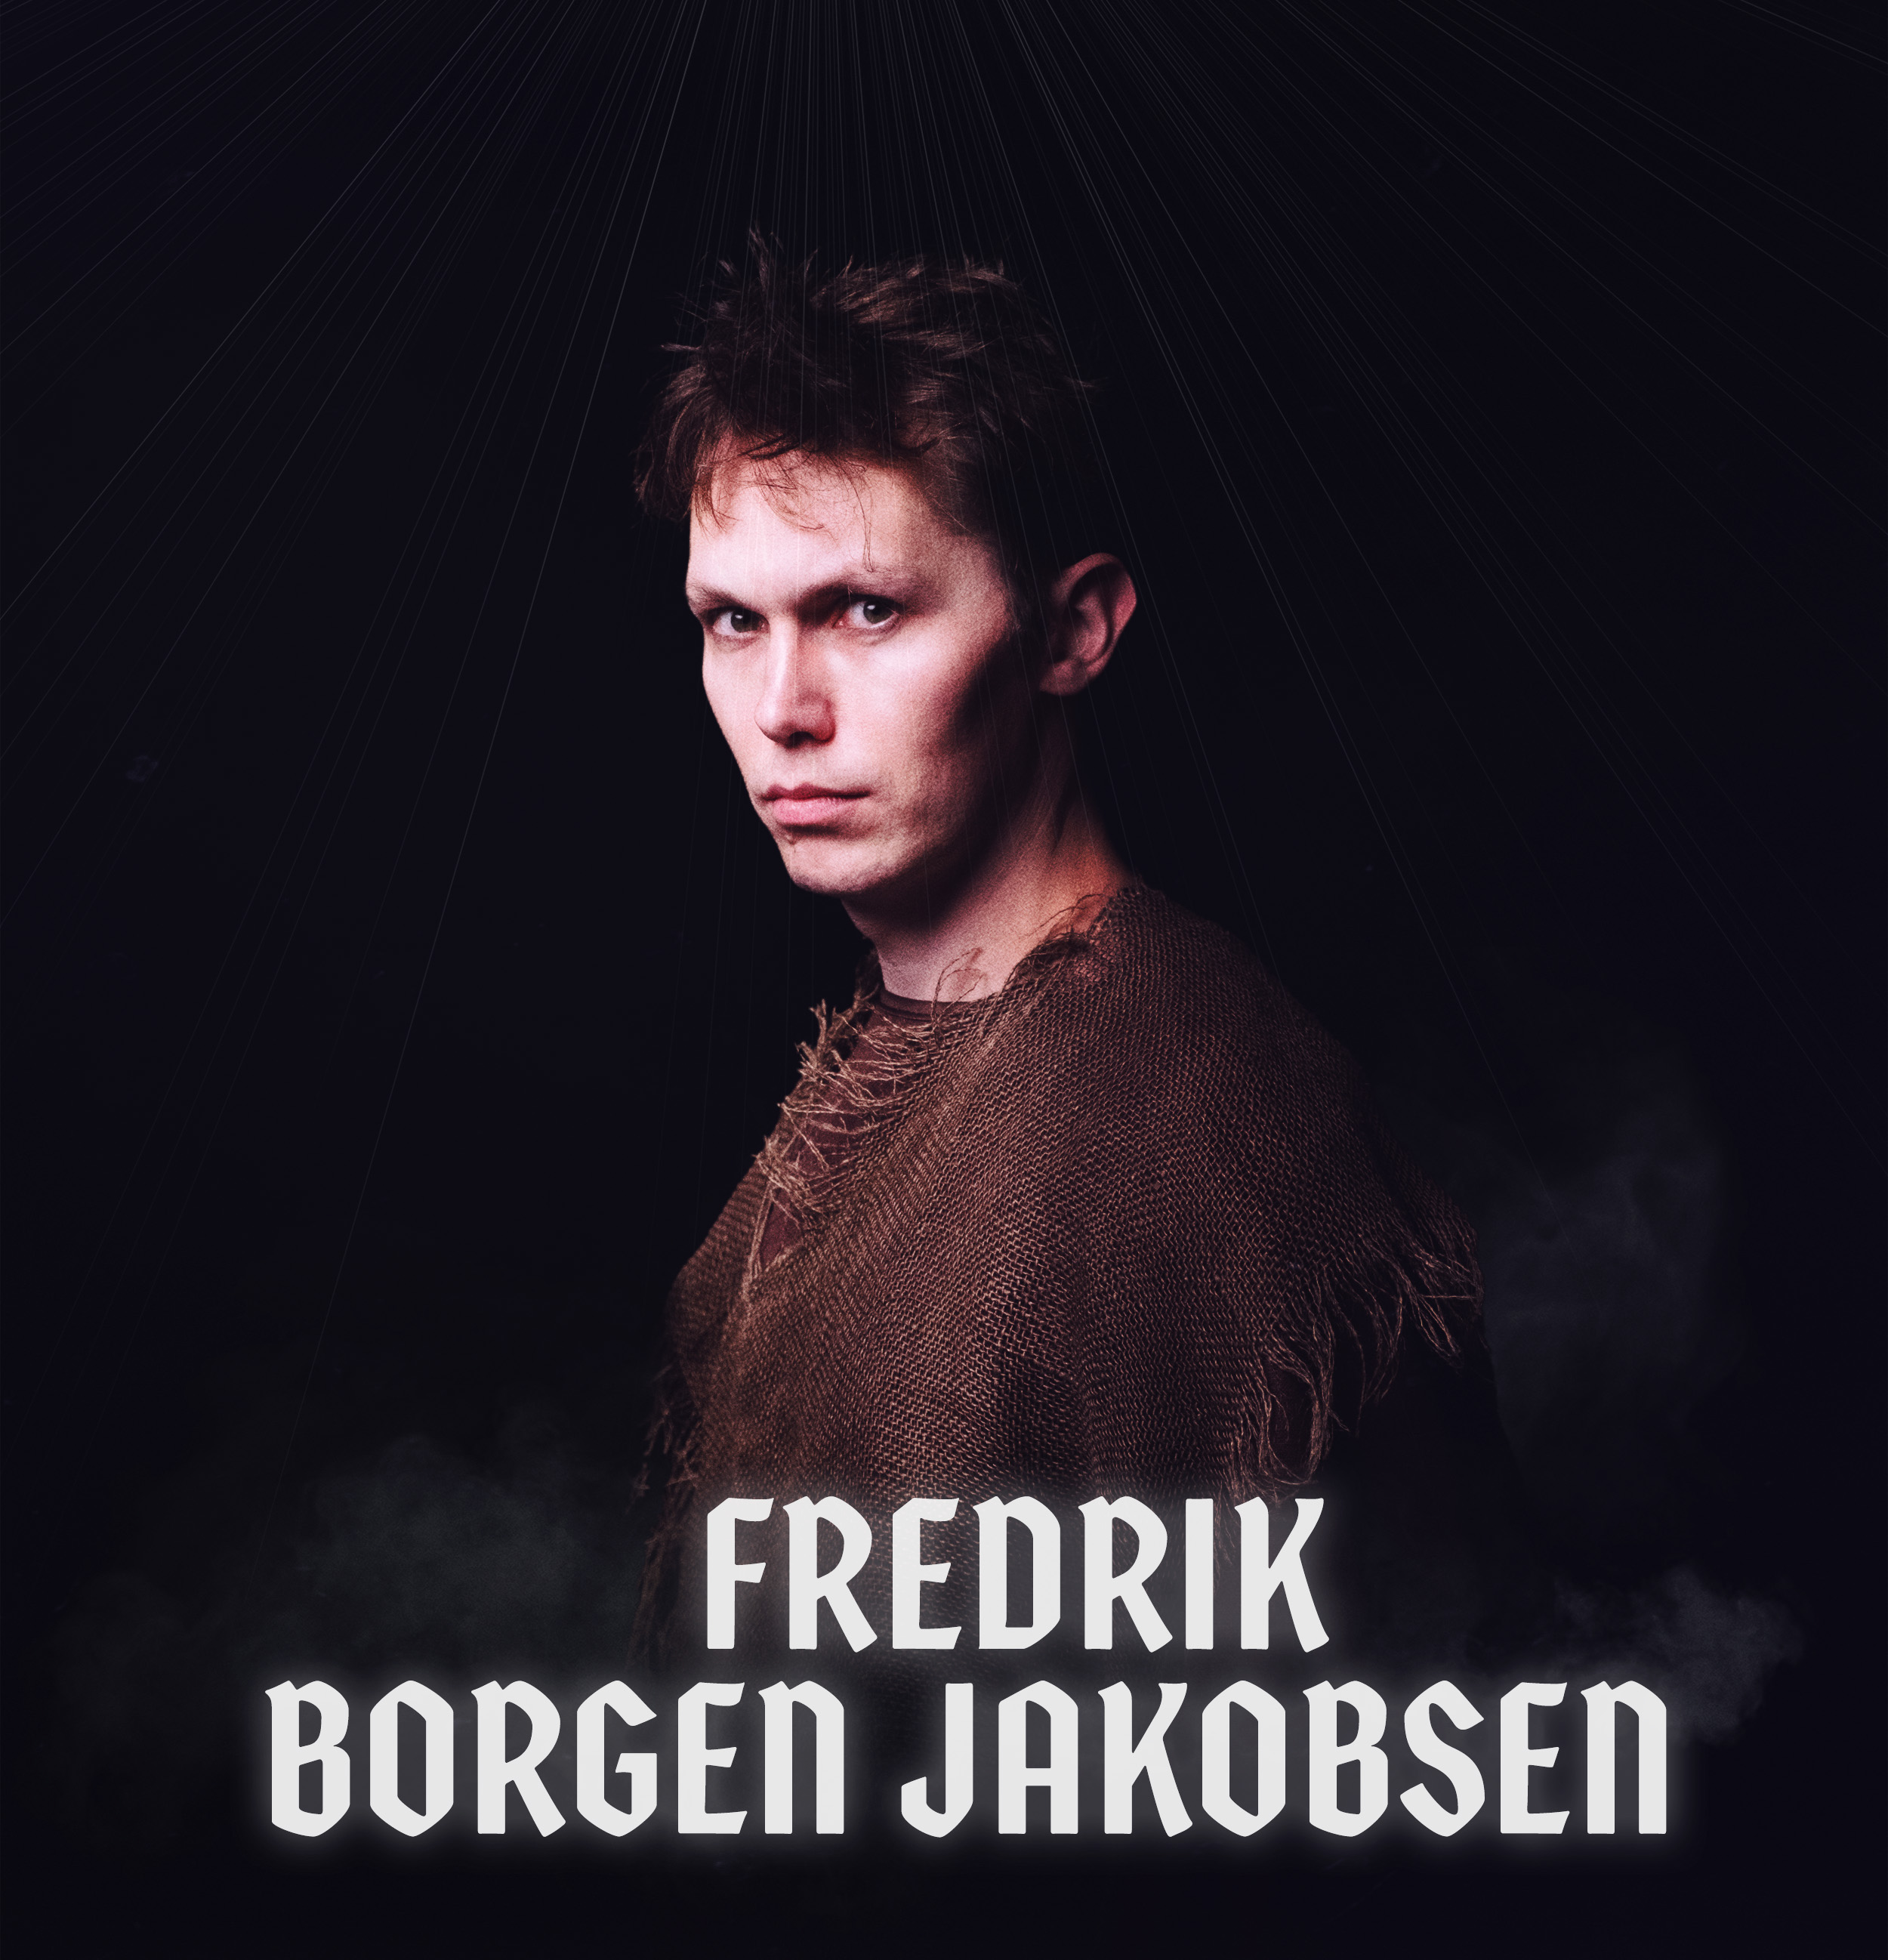  Fredrik Borgen Jakobsen